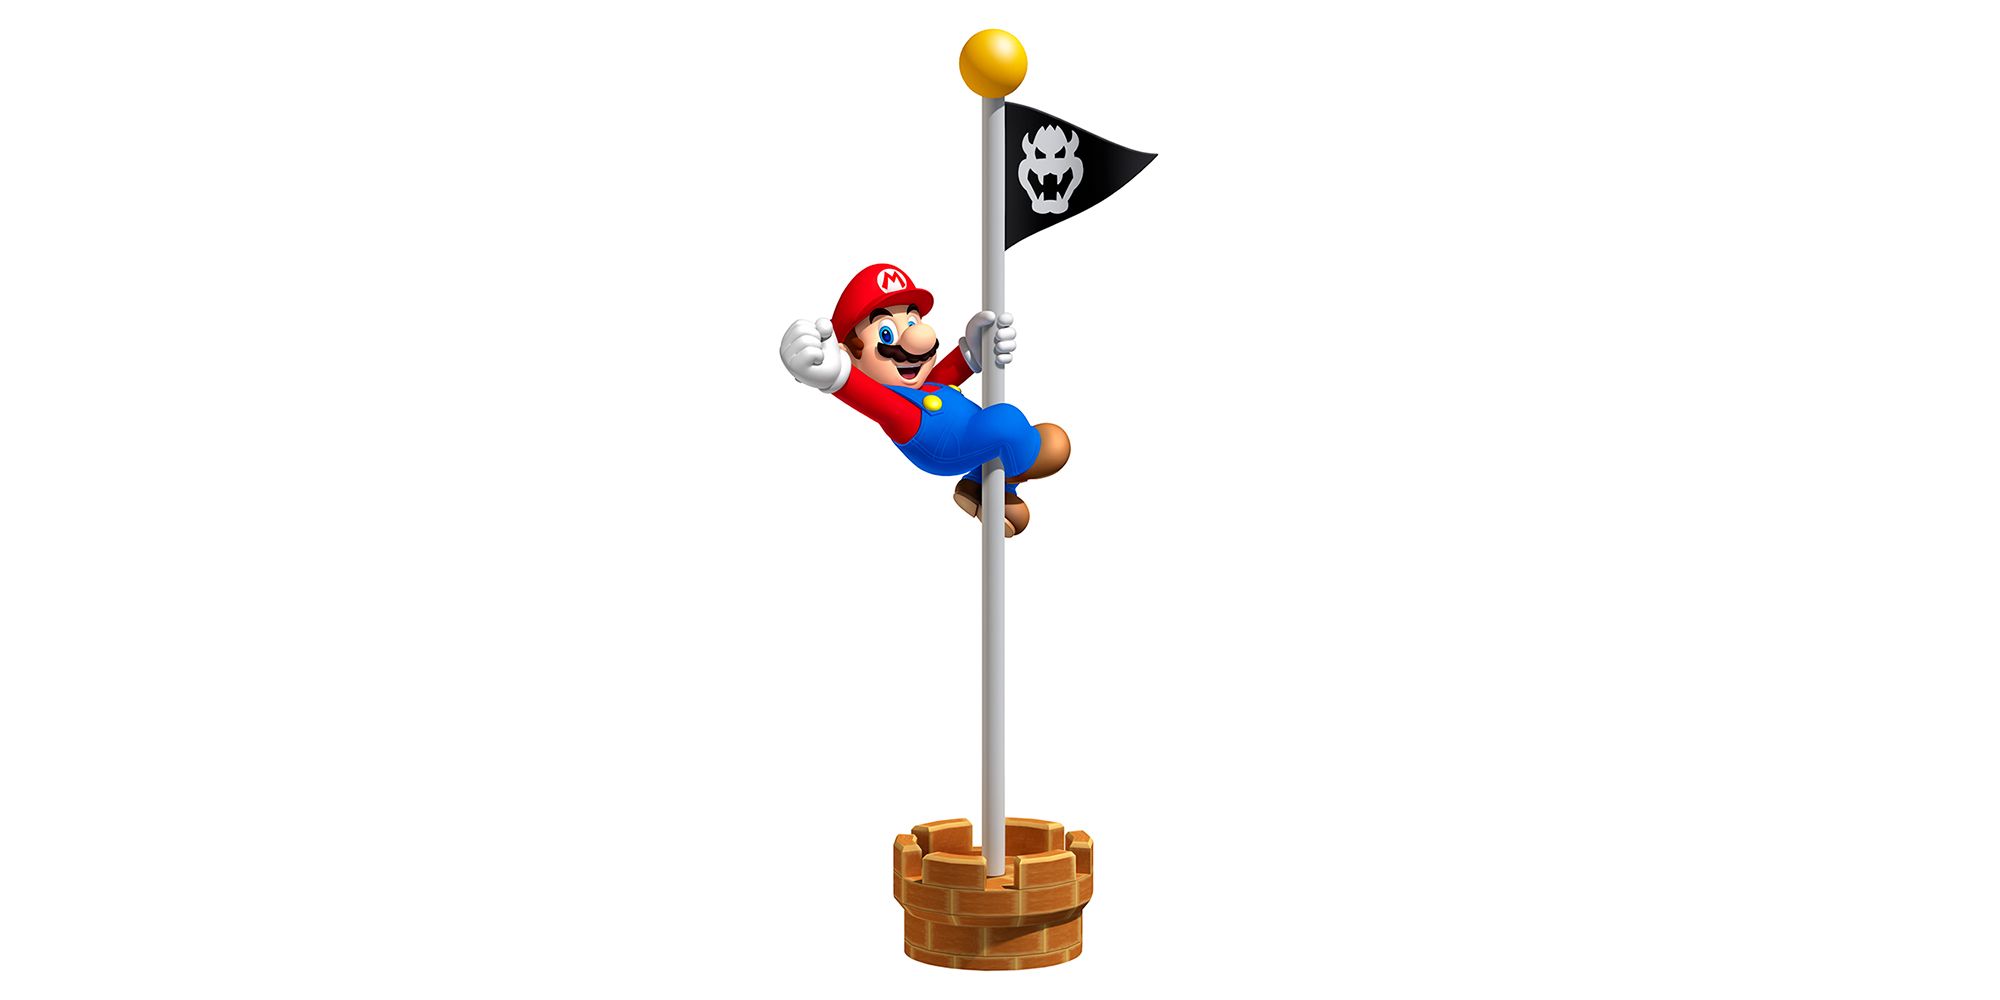 Super Mario on a goal pole